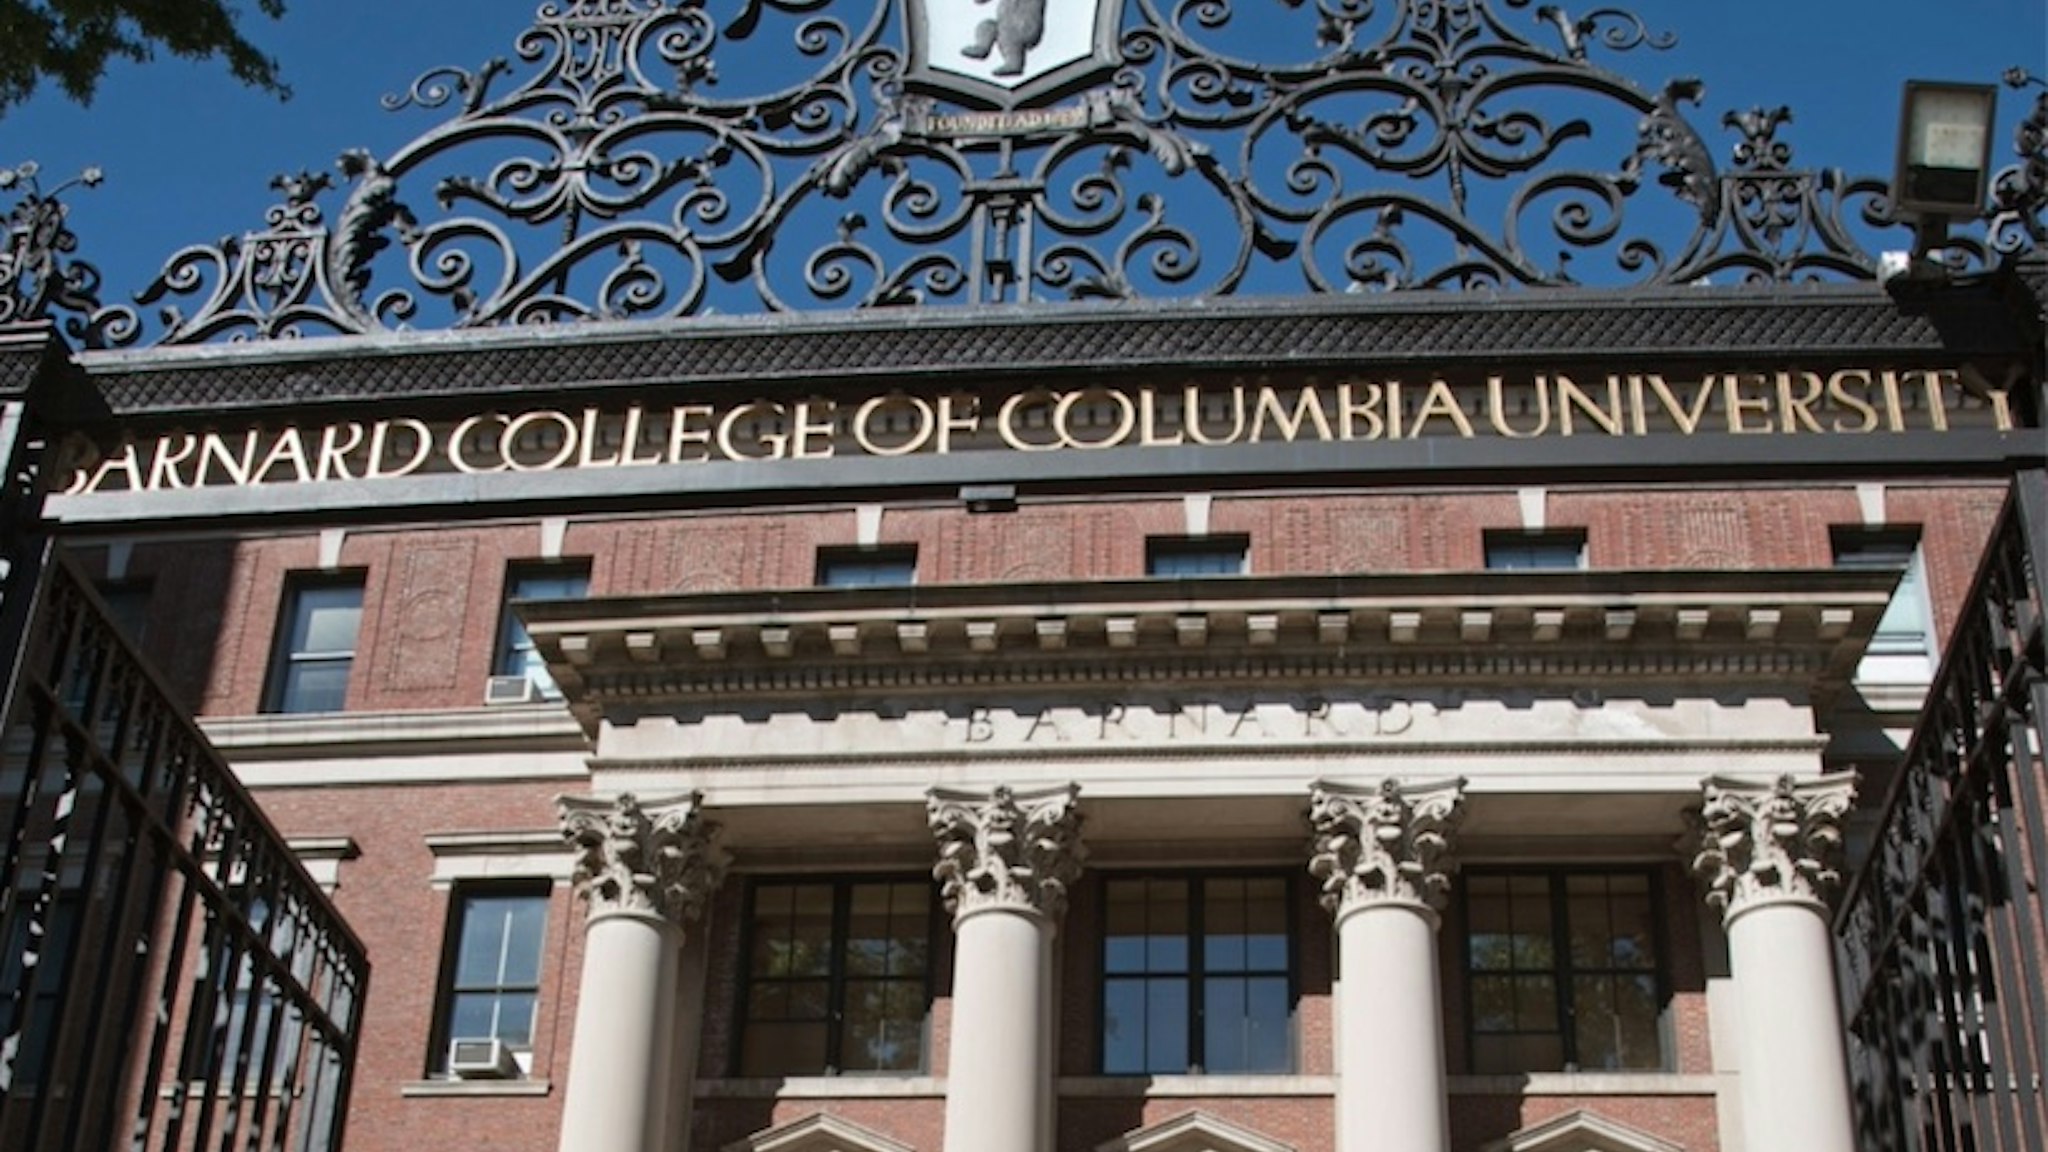 Columbia University New York USA, Barnard College of Columbia University on Broadway NYC.